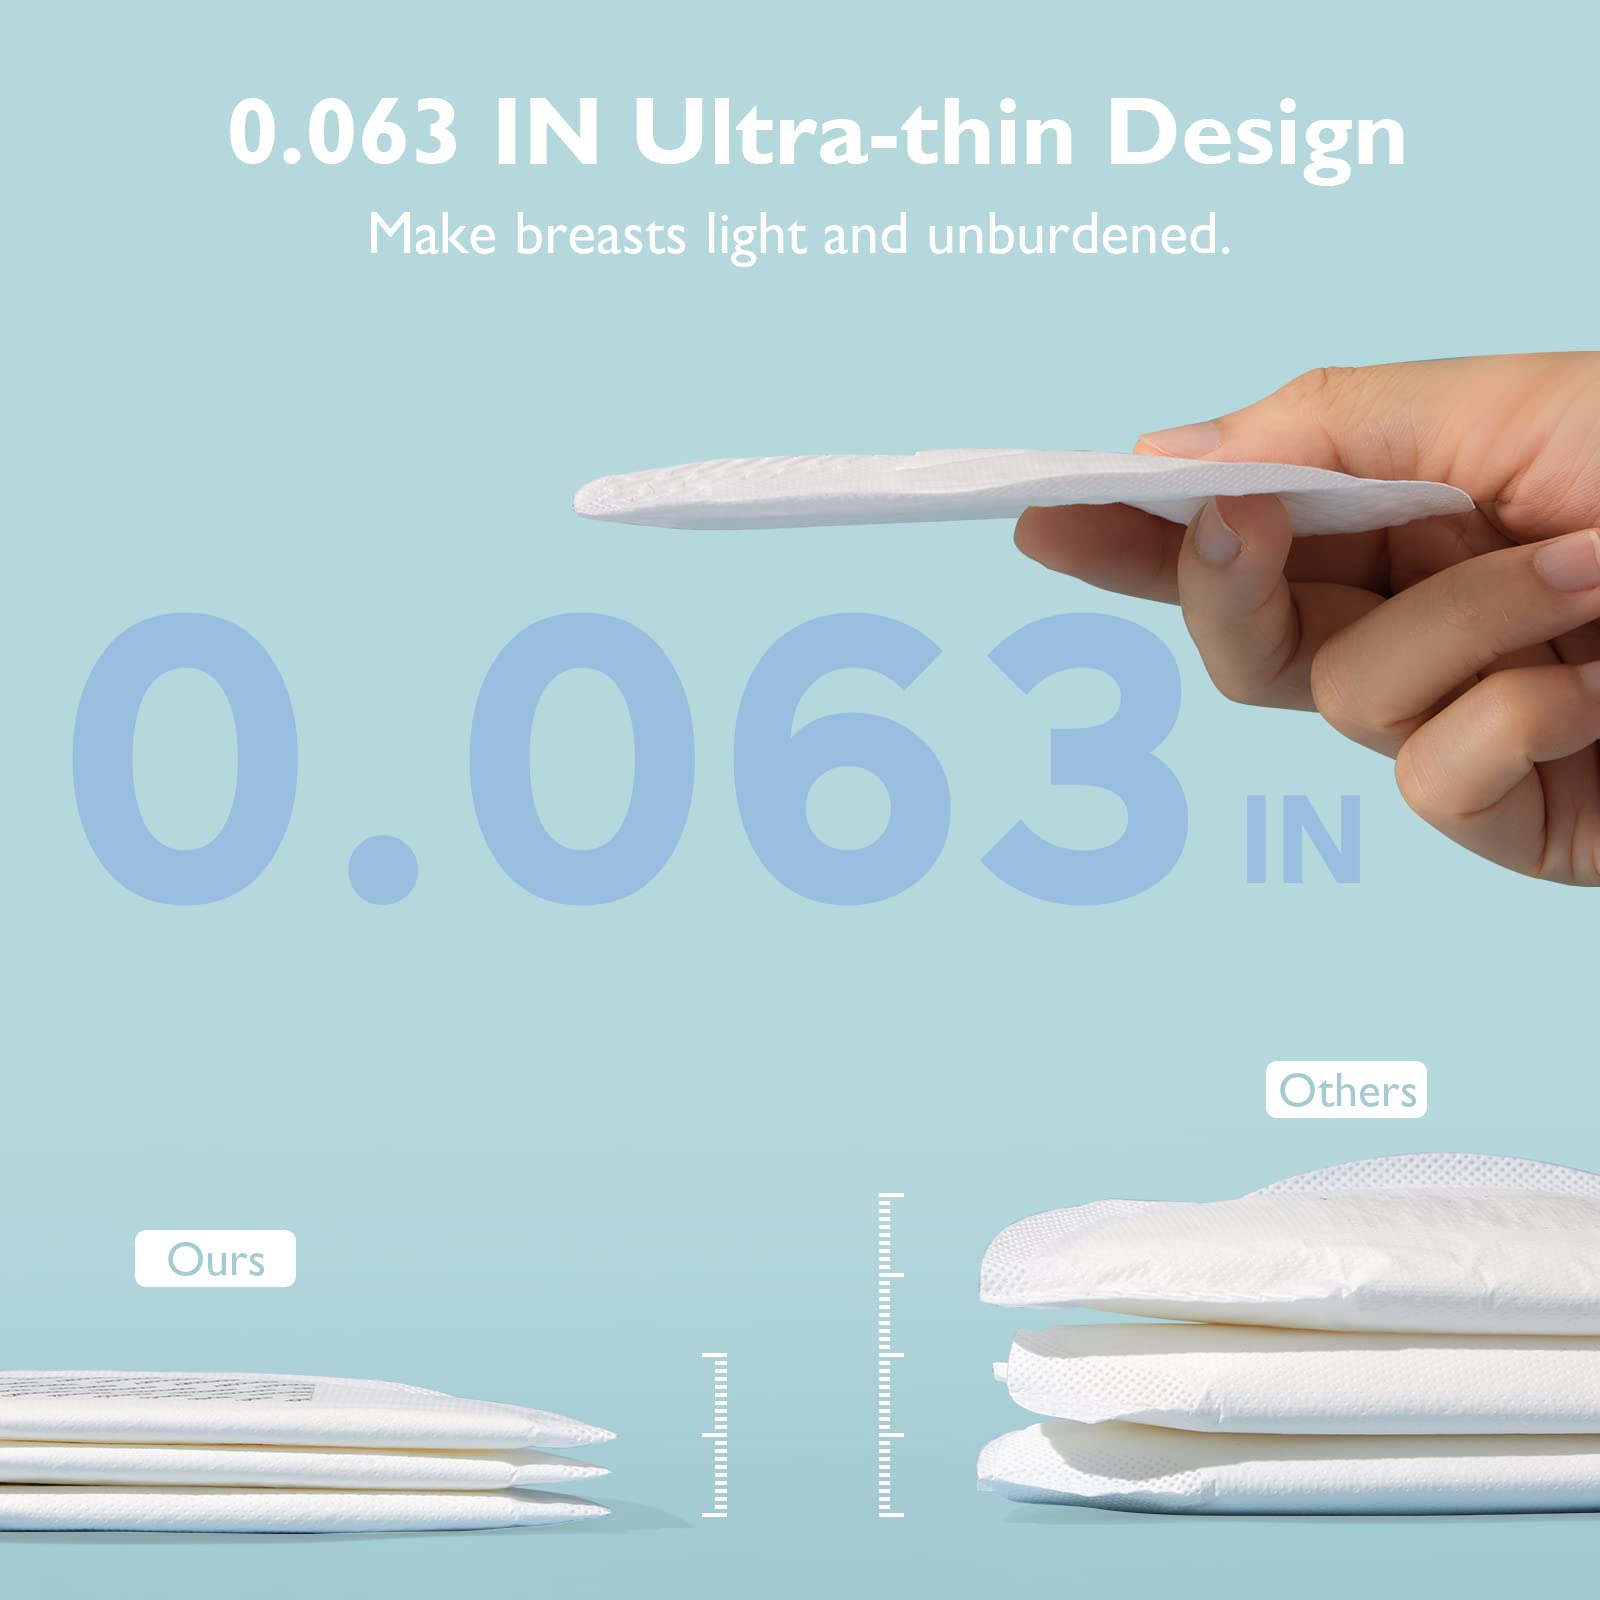 Momcozy Ultra-Thin Disposable Nursing Pads